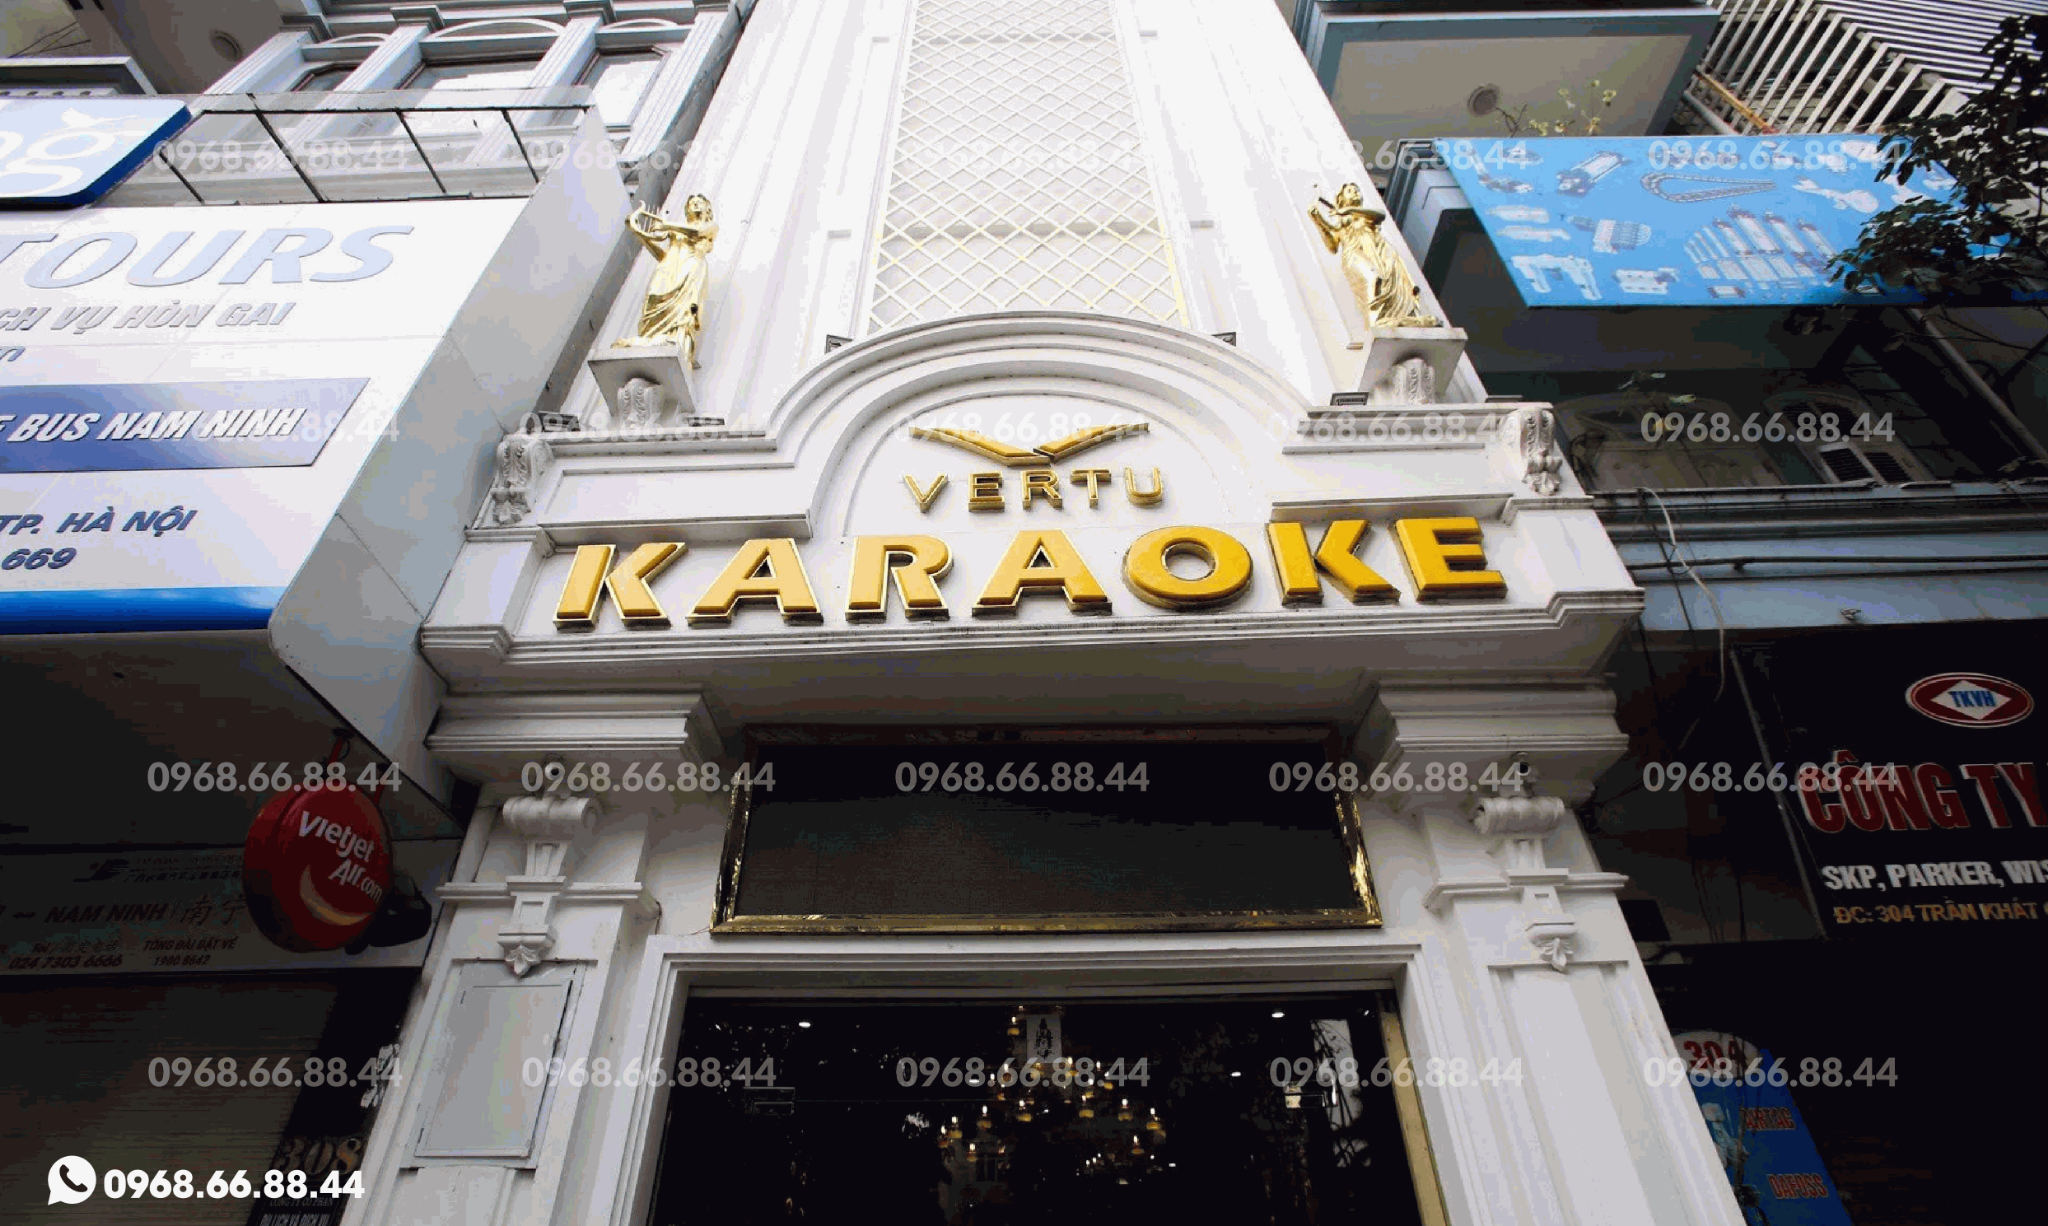 Karaoke Vertu - 306 Trần Khát Chân